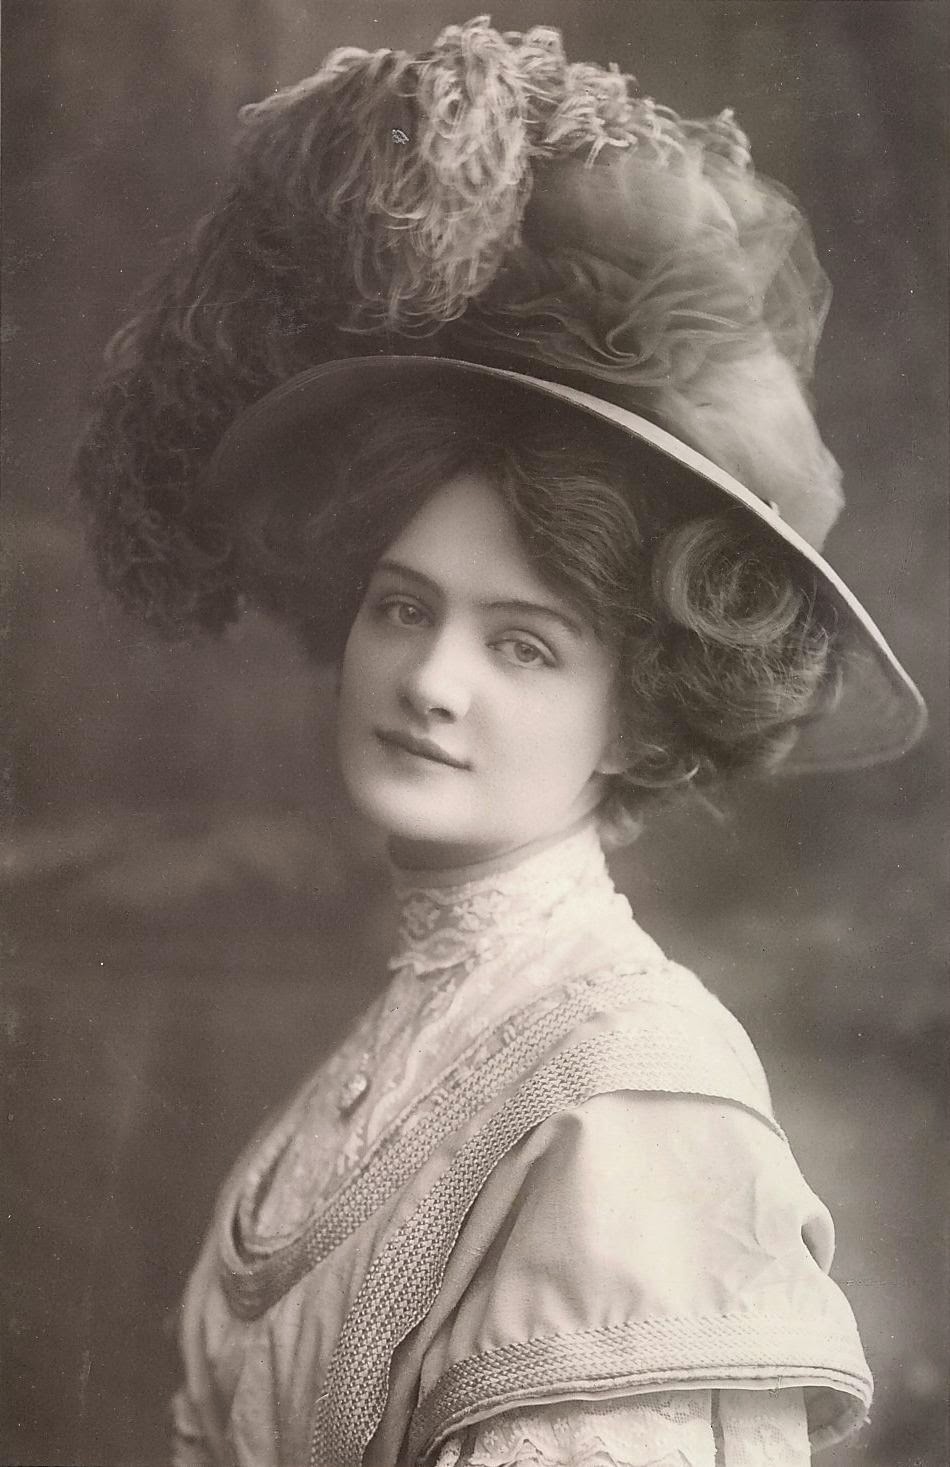 Portrait of Lily Elsie, elegancepedia